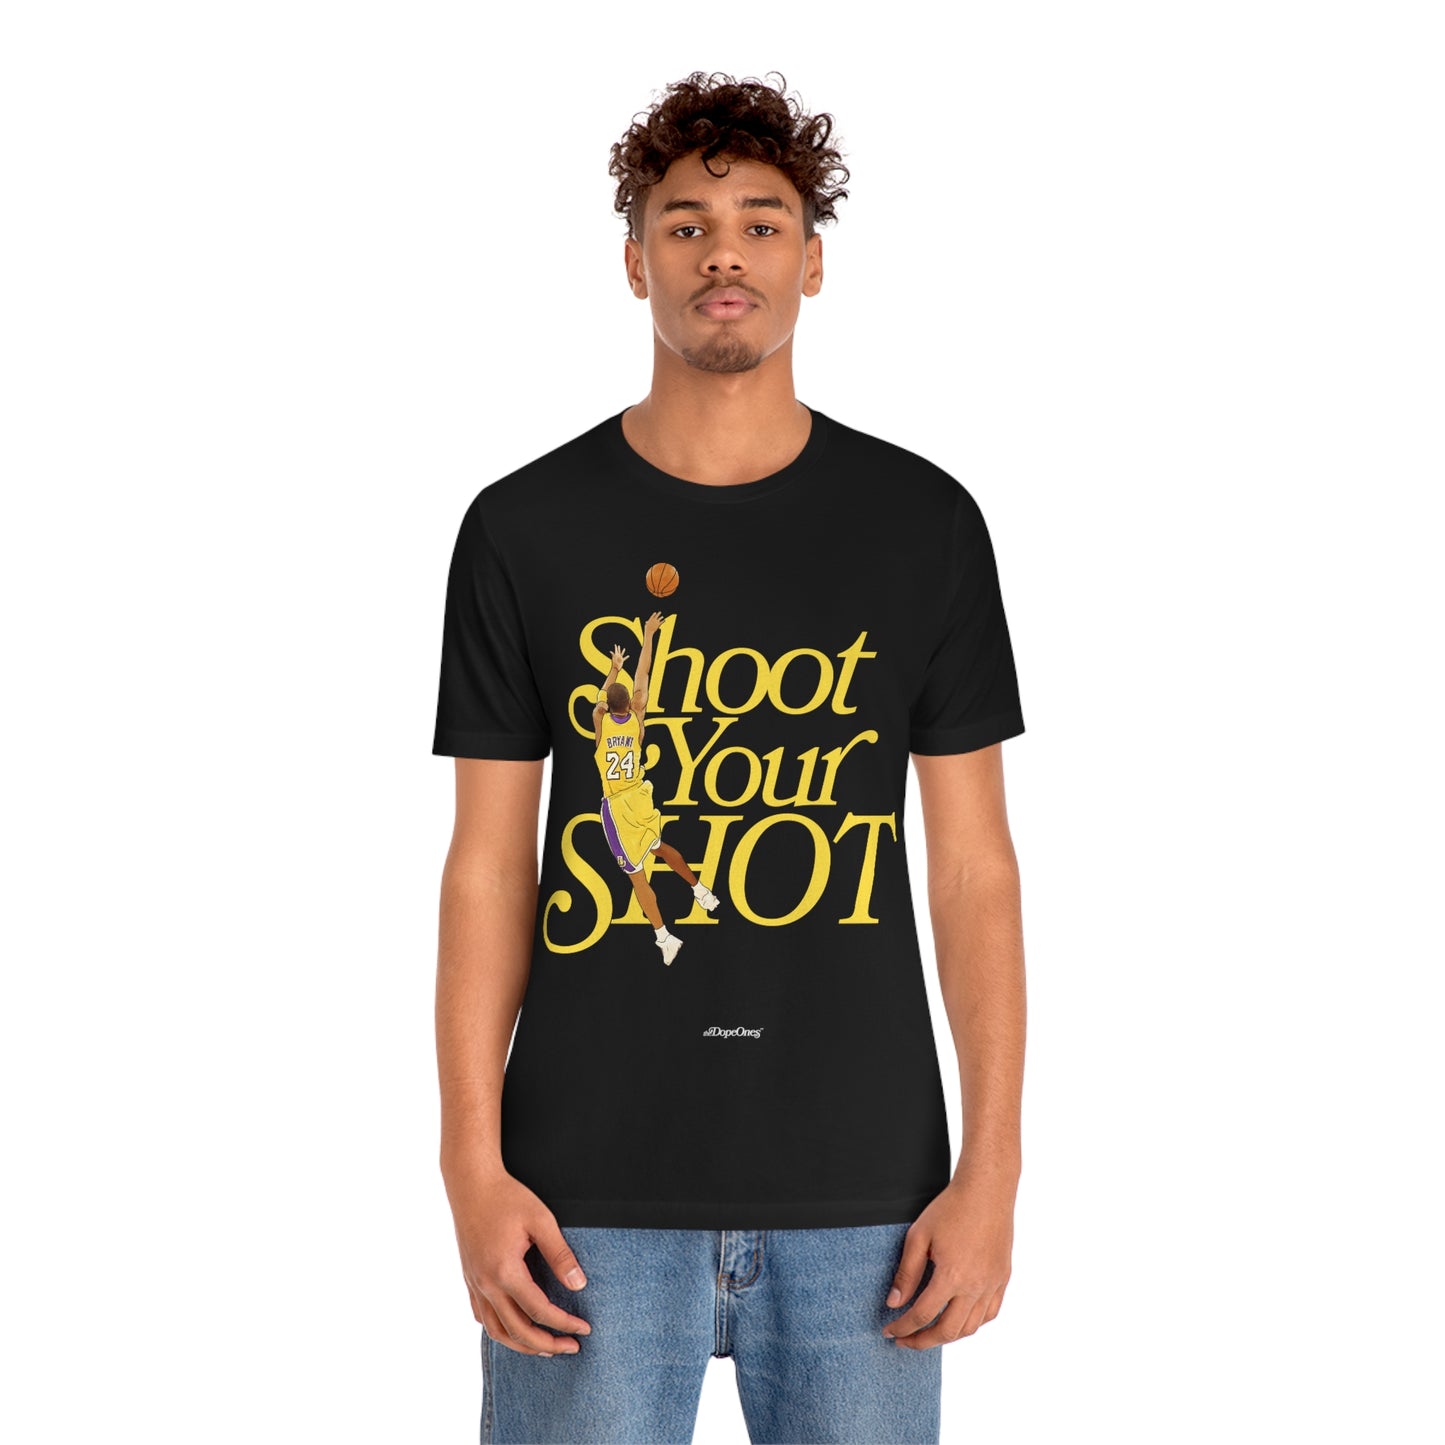 Kobe Shoot Your Shot Tee